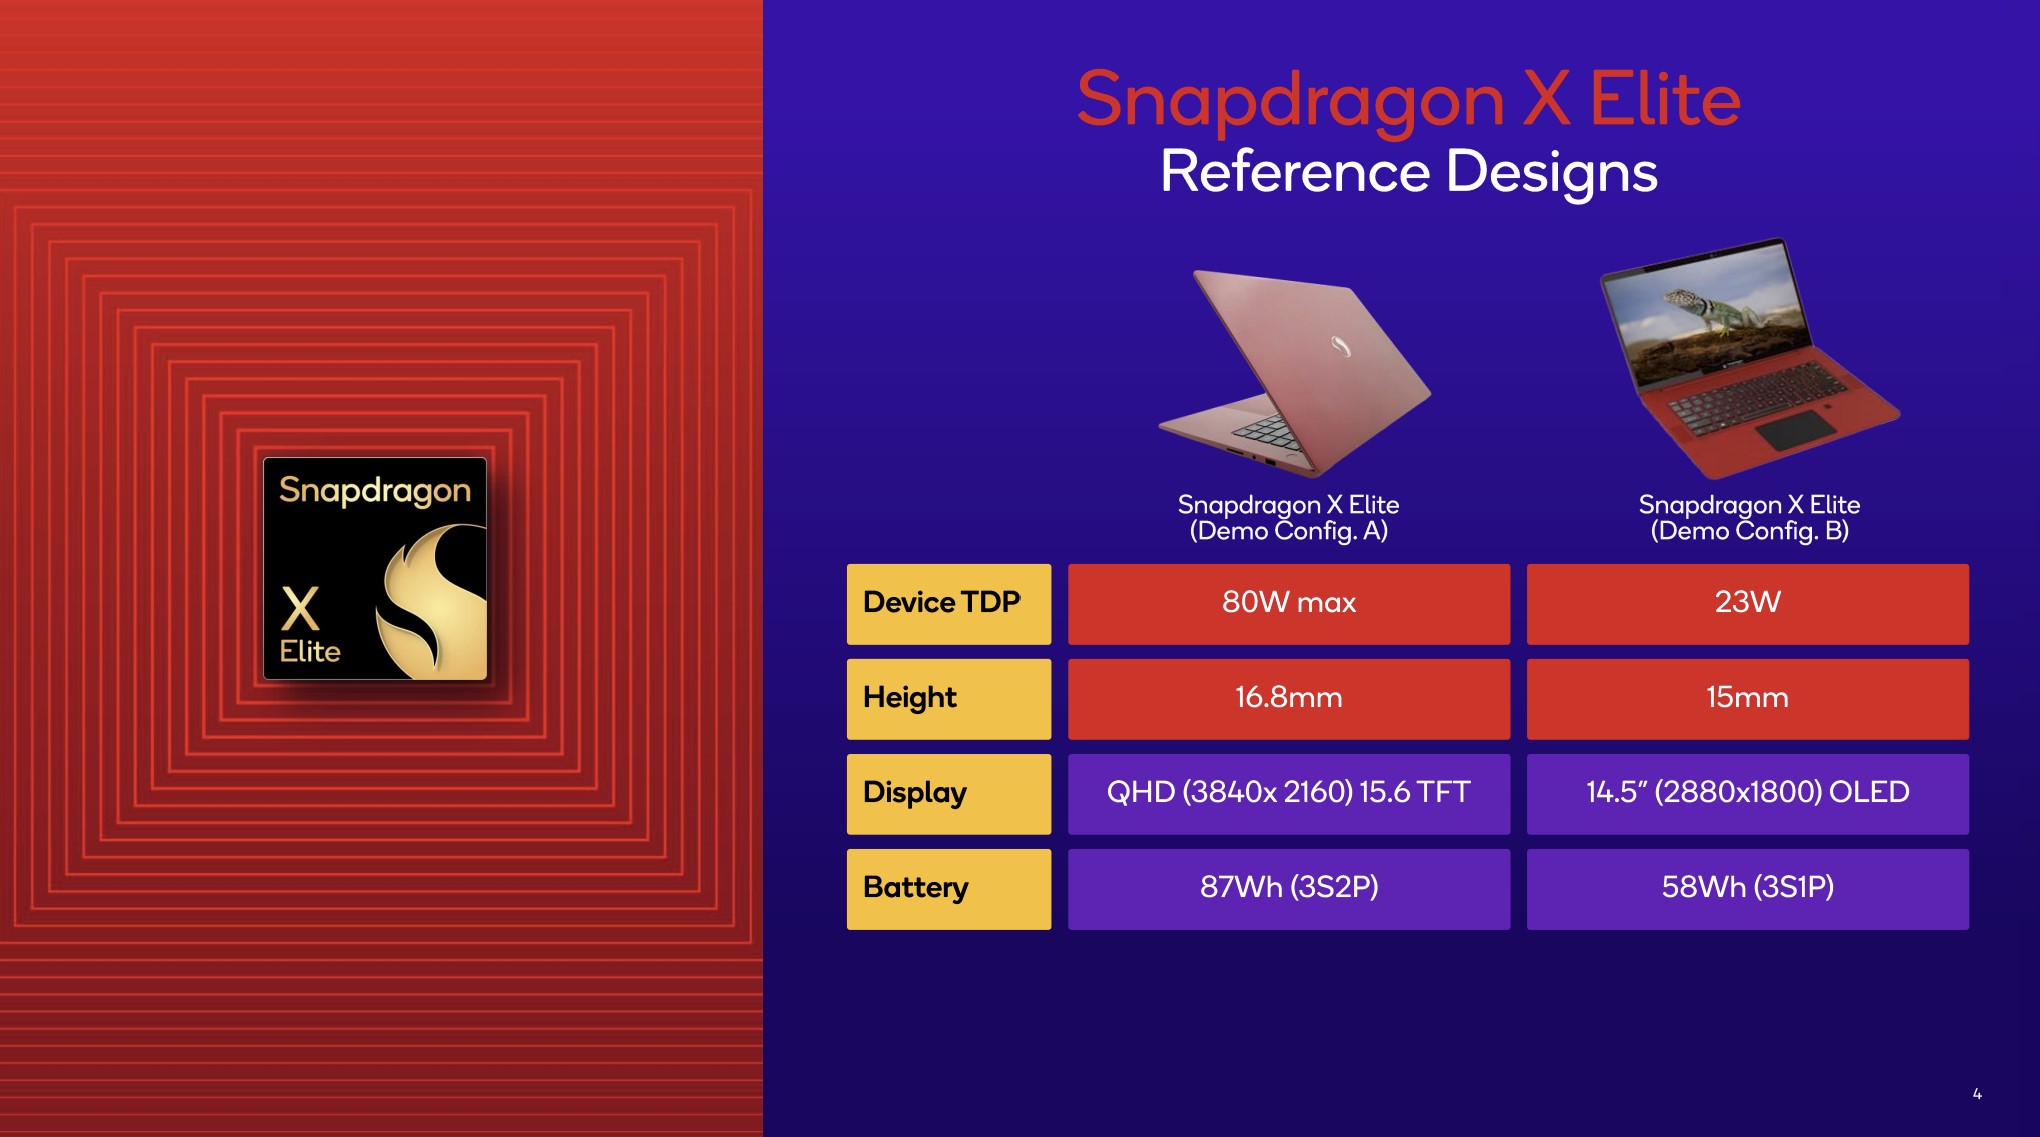 Snapdragon X Elite benchmarks